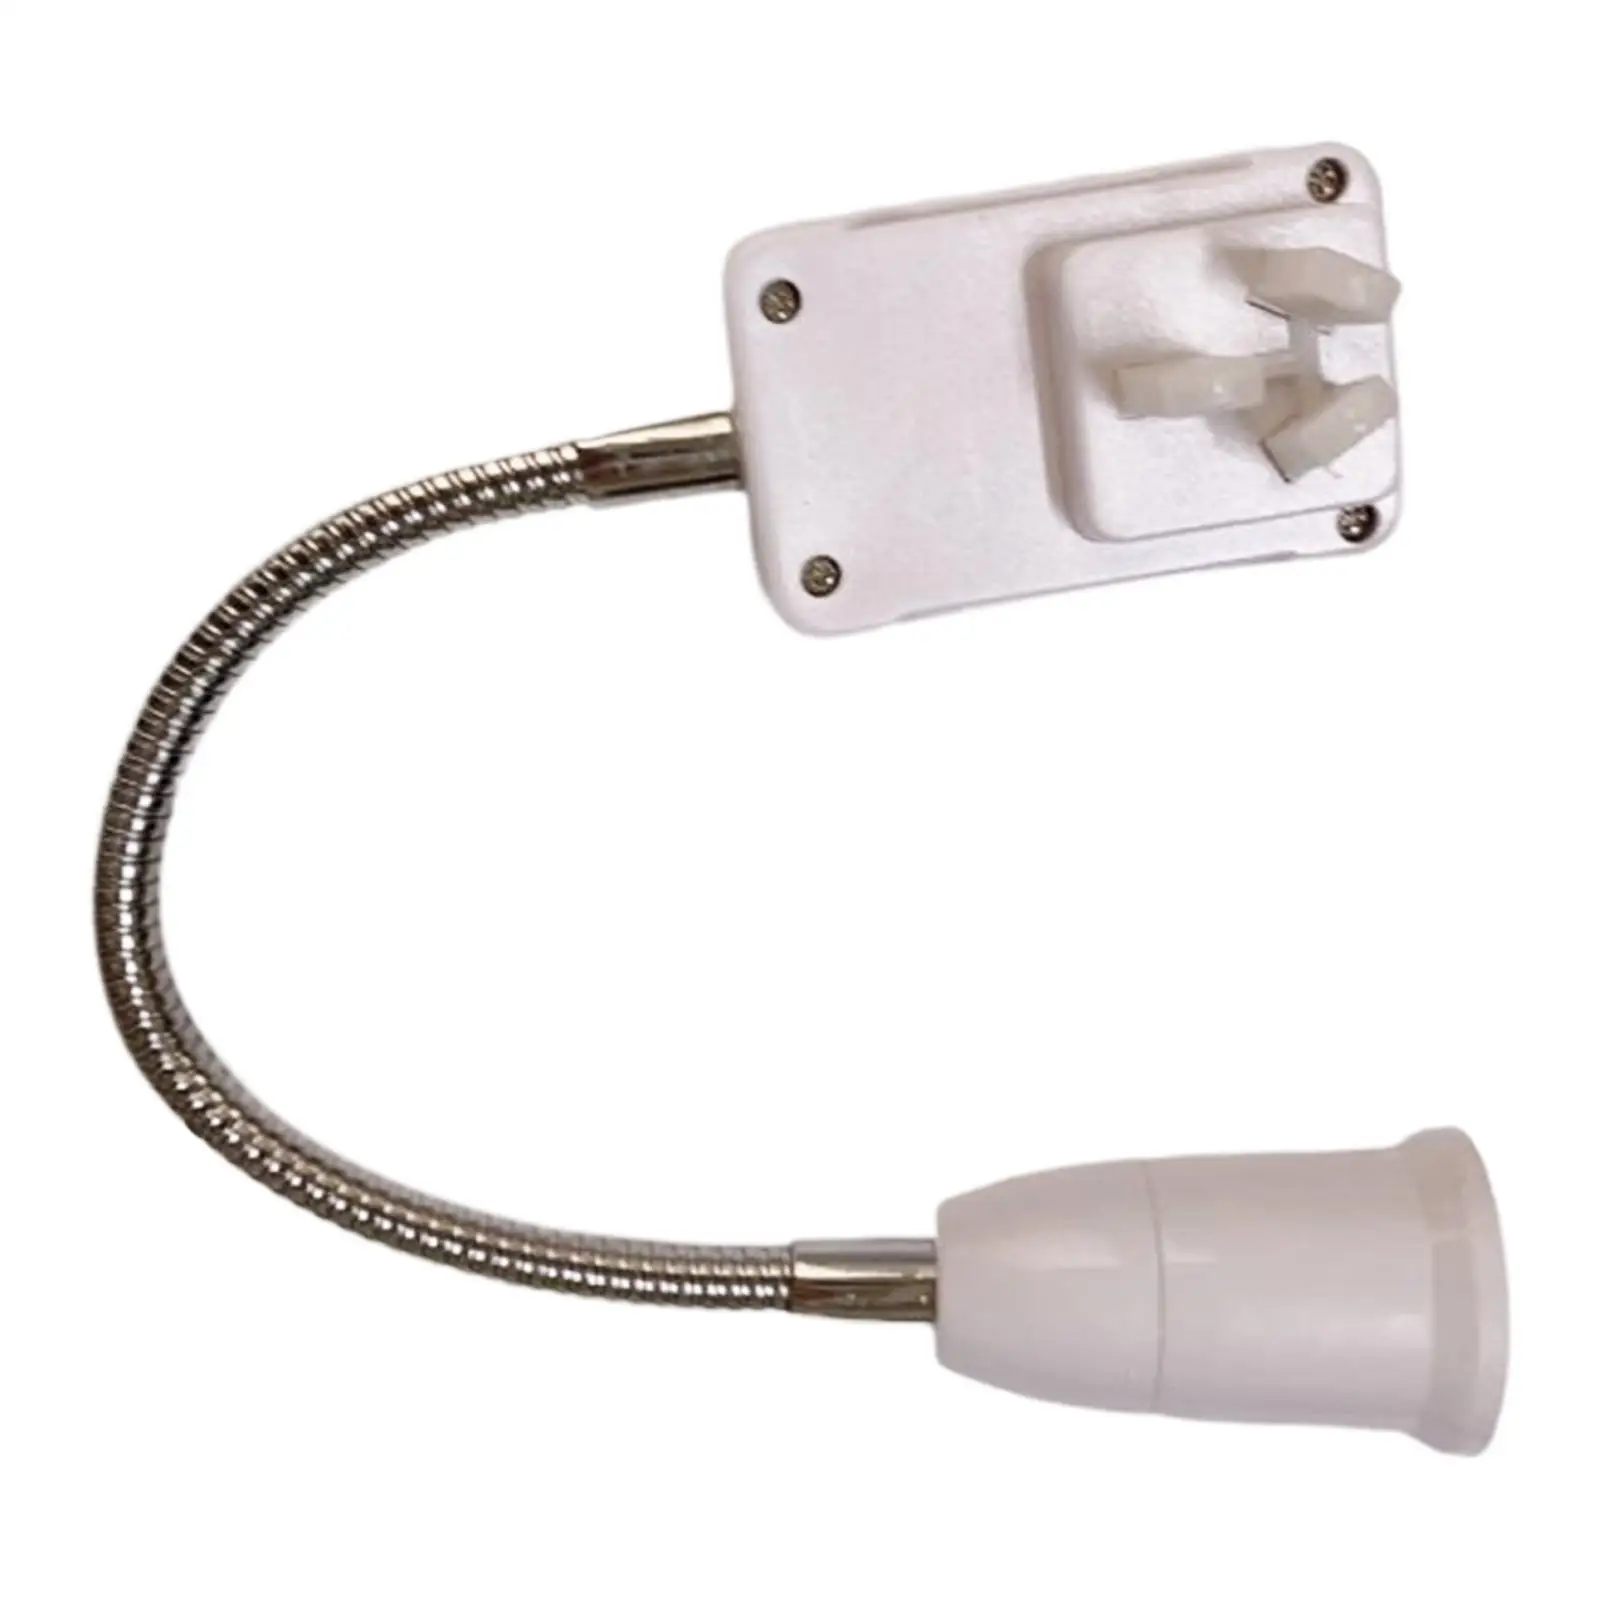 E27 Socket Light Bulb Socket Adaptor Converter Lamp Holder with Switch AU